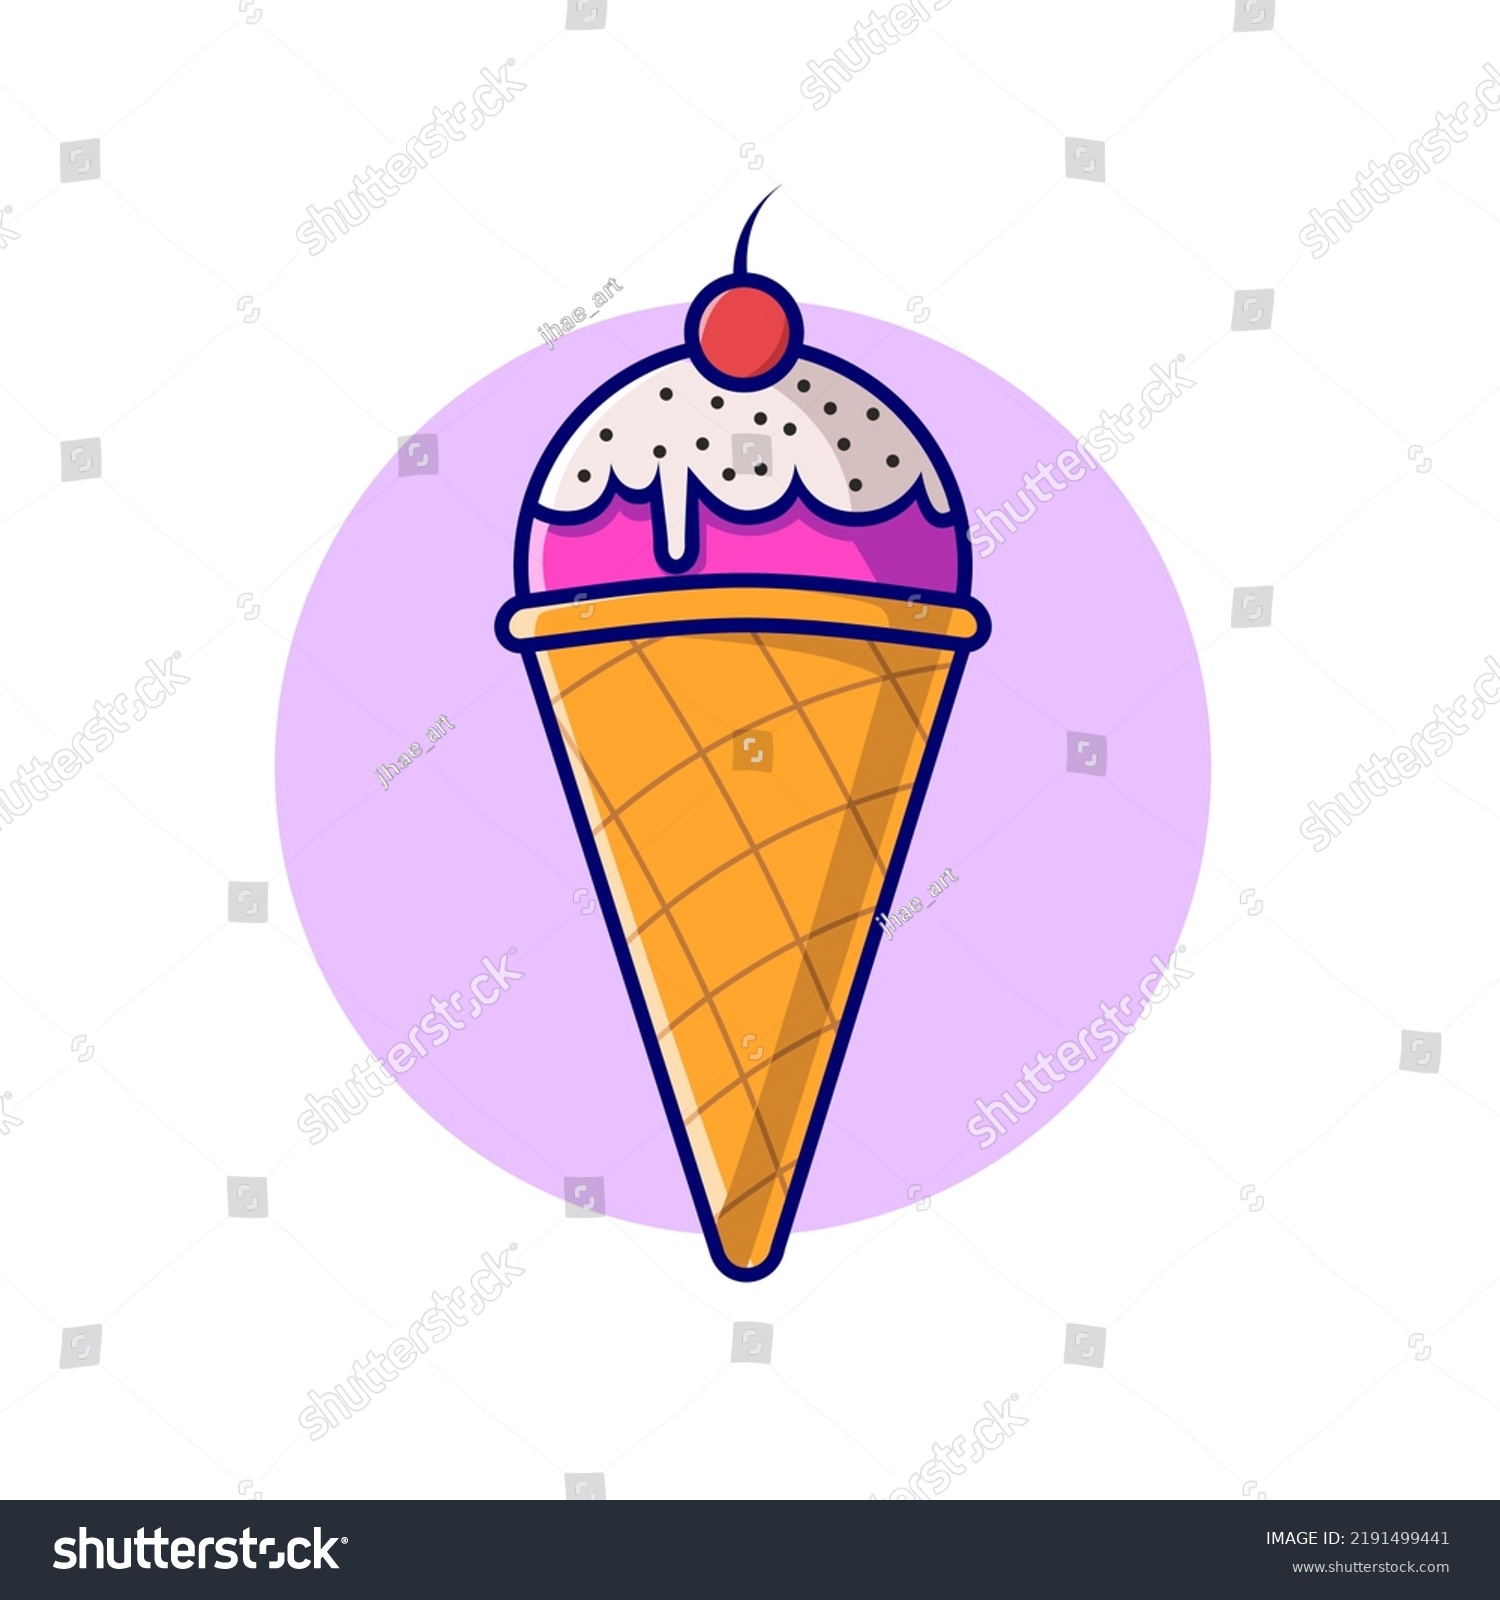 Ice Cream Cone Cartoon Icon Illustration Stock Vector Royalty Free 2191499441 Shutterstock 